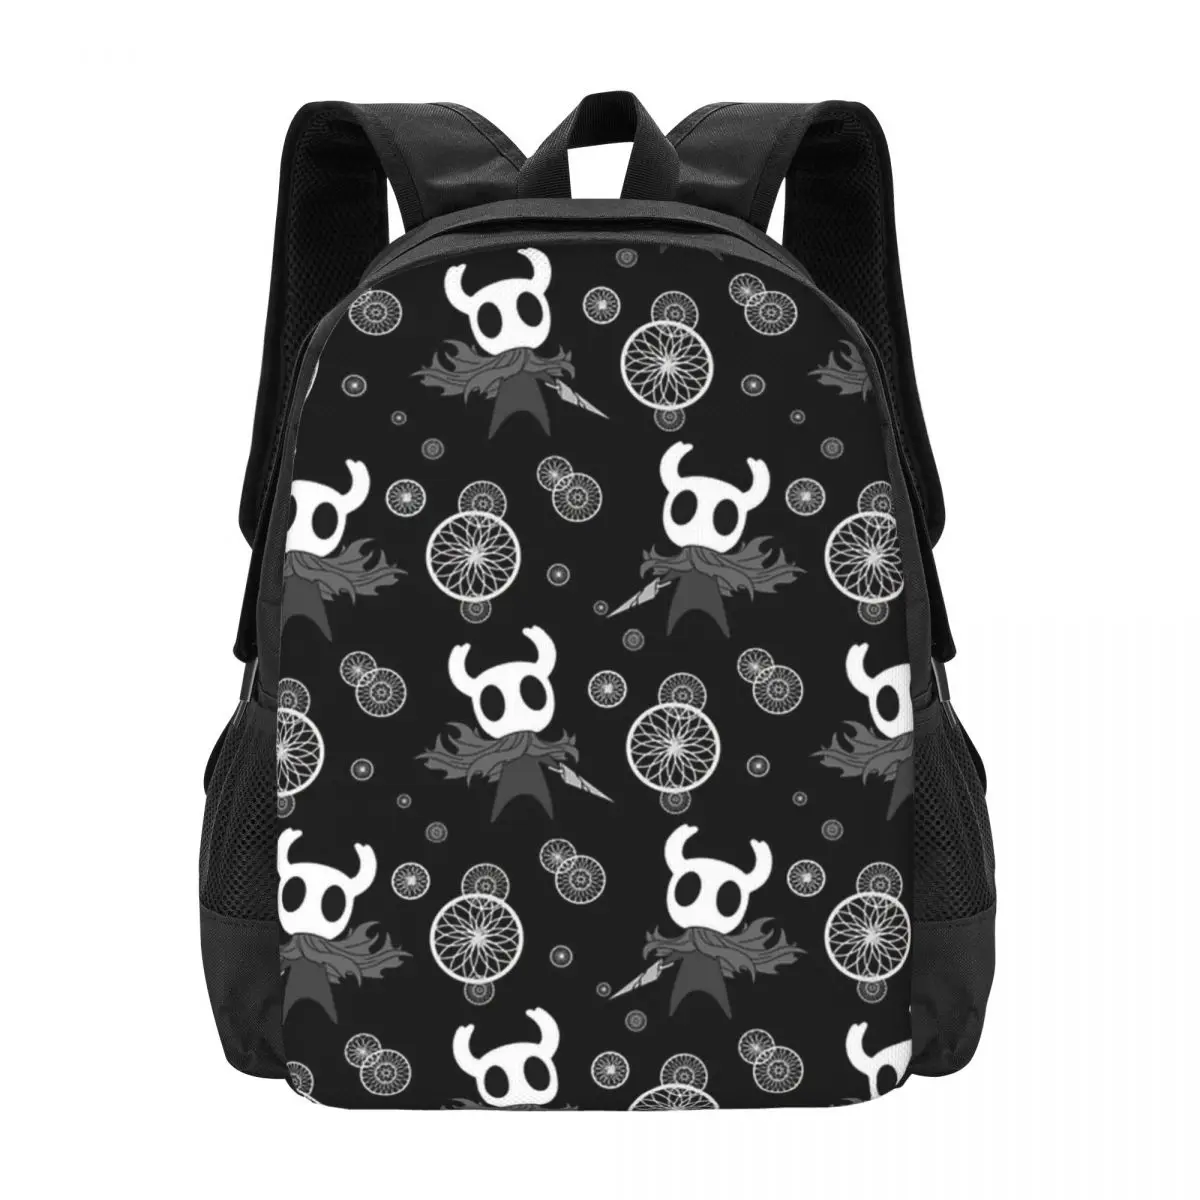 Hollow Knight Pattern Backpack for Girls Boys Travel RucksackBackpacks for Teenage school bag